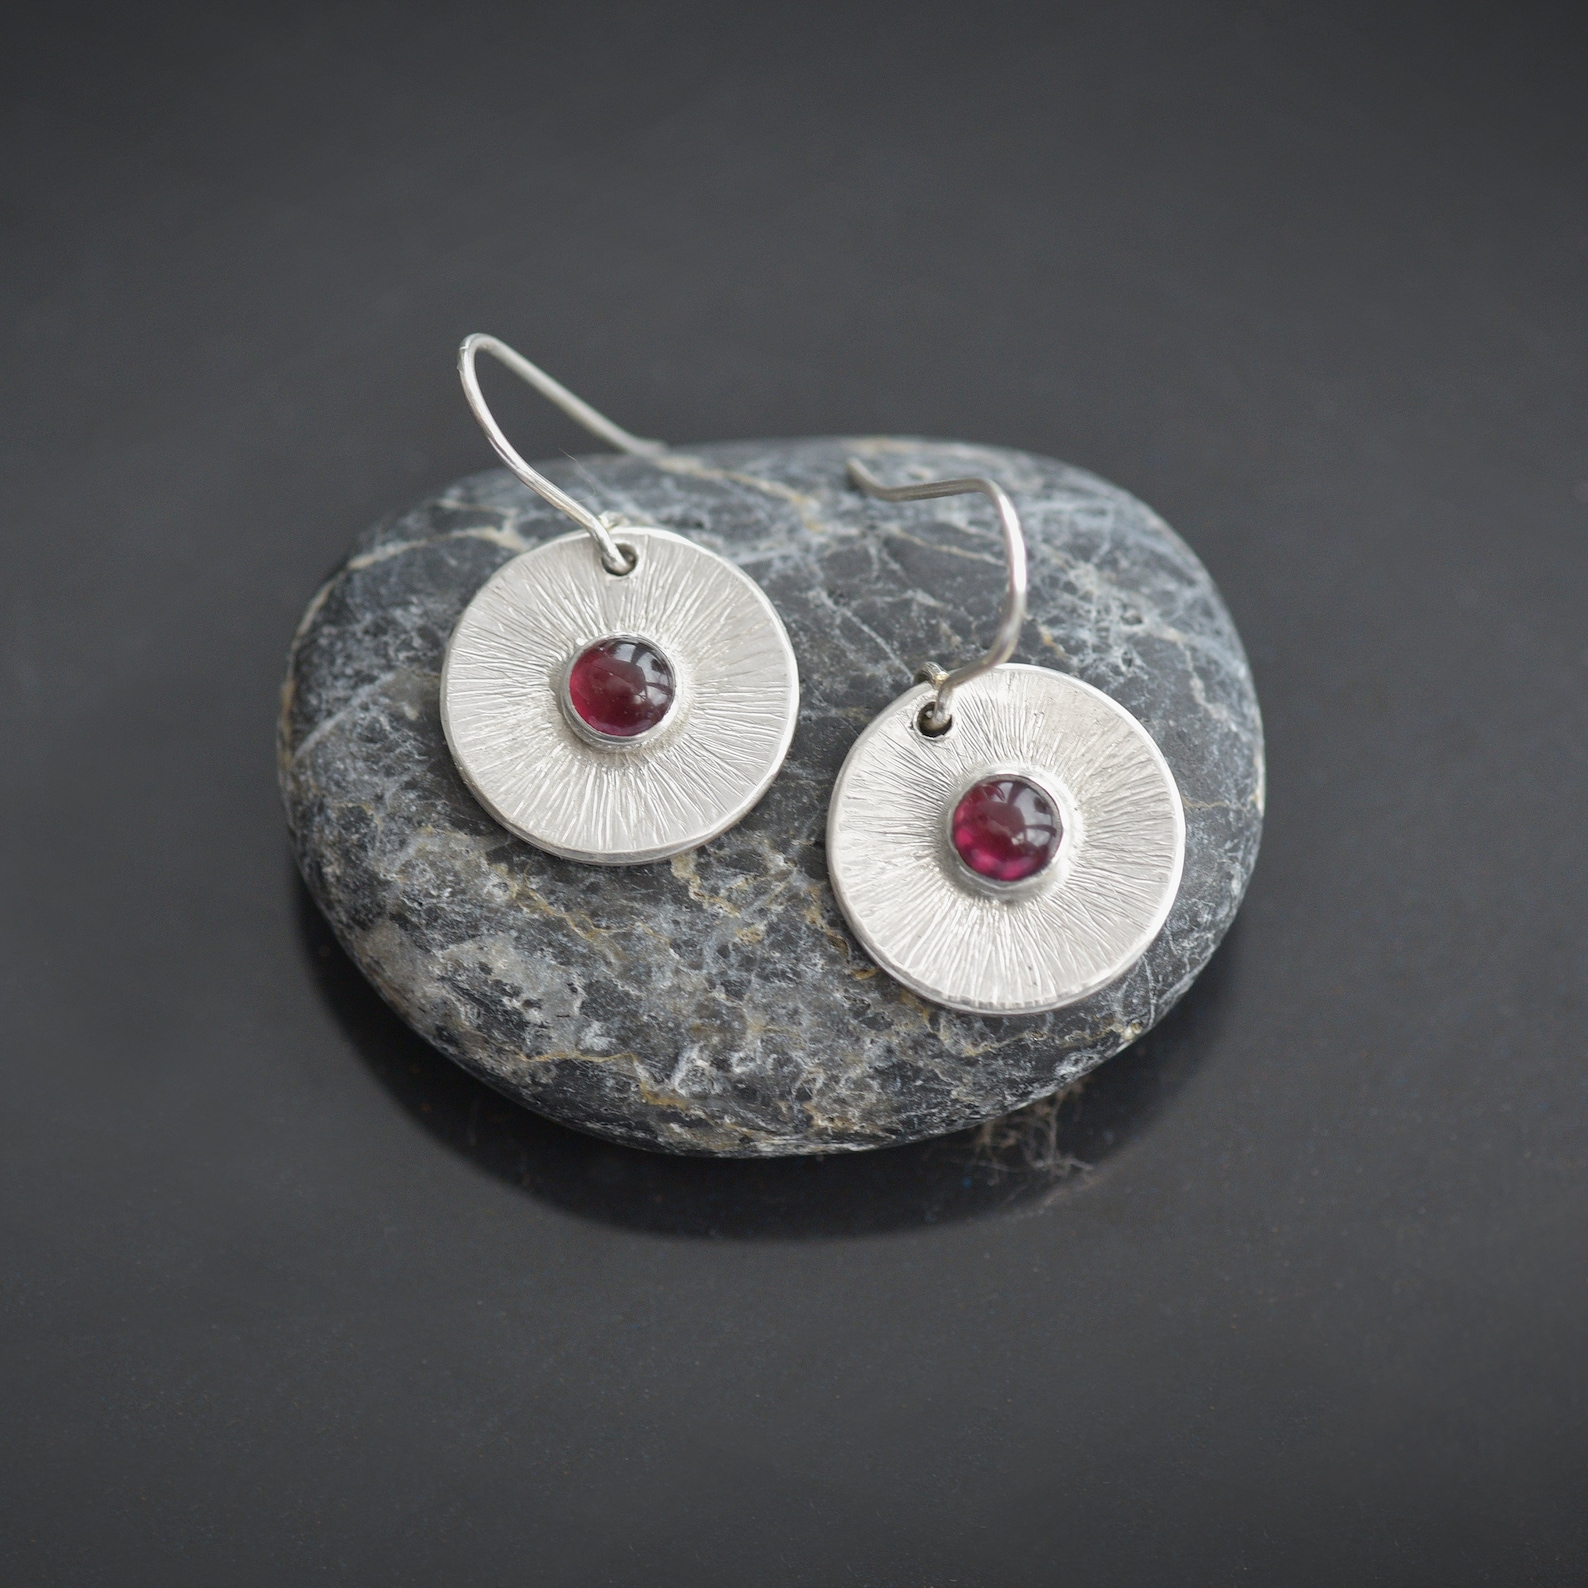 gemstone earrings - Garnet earrings